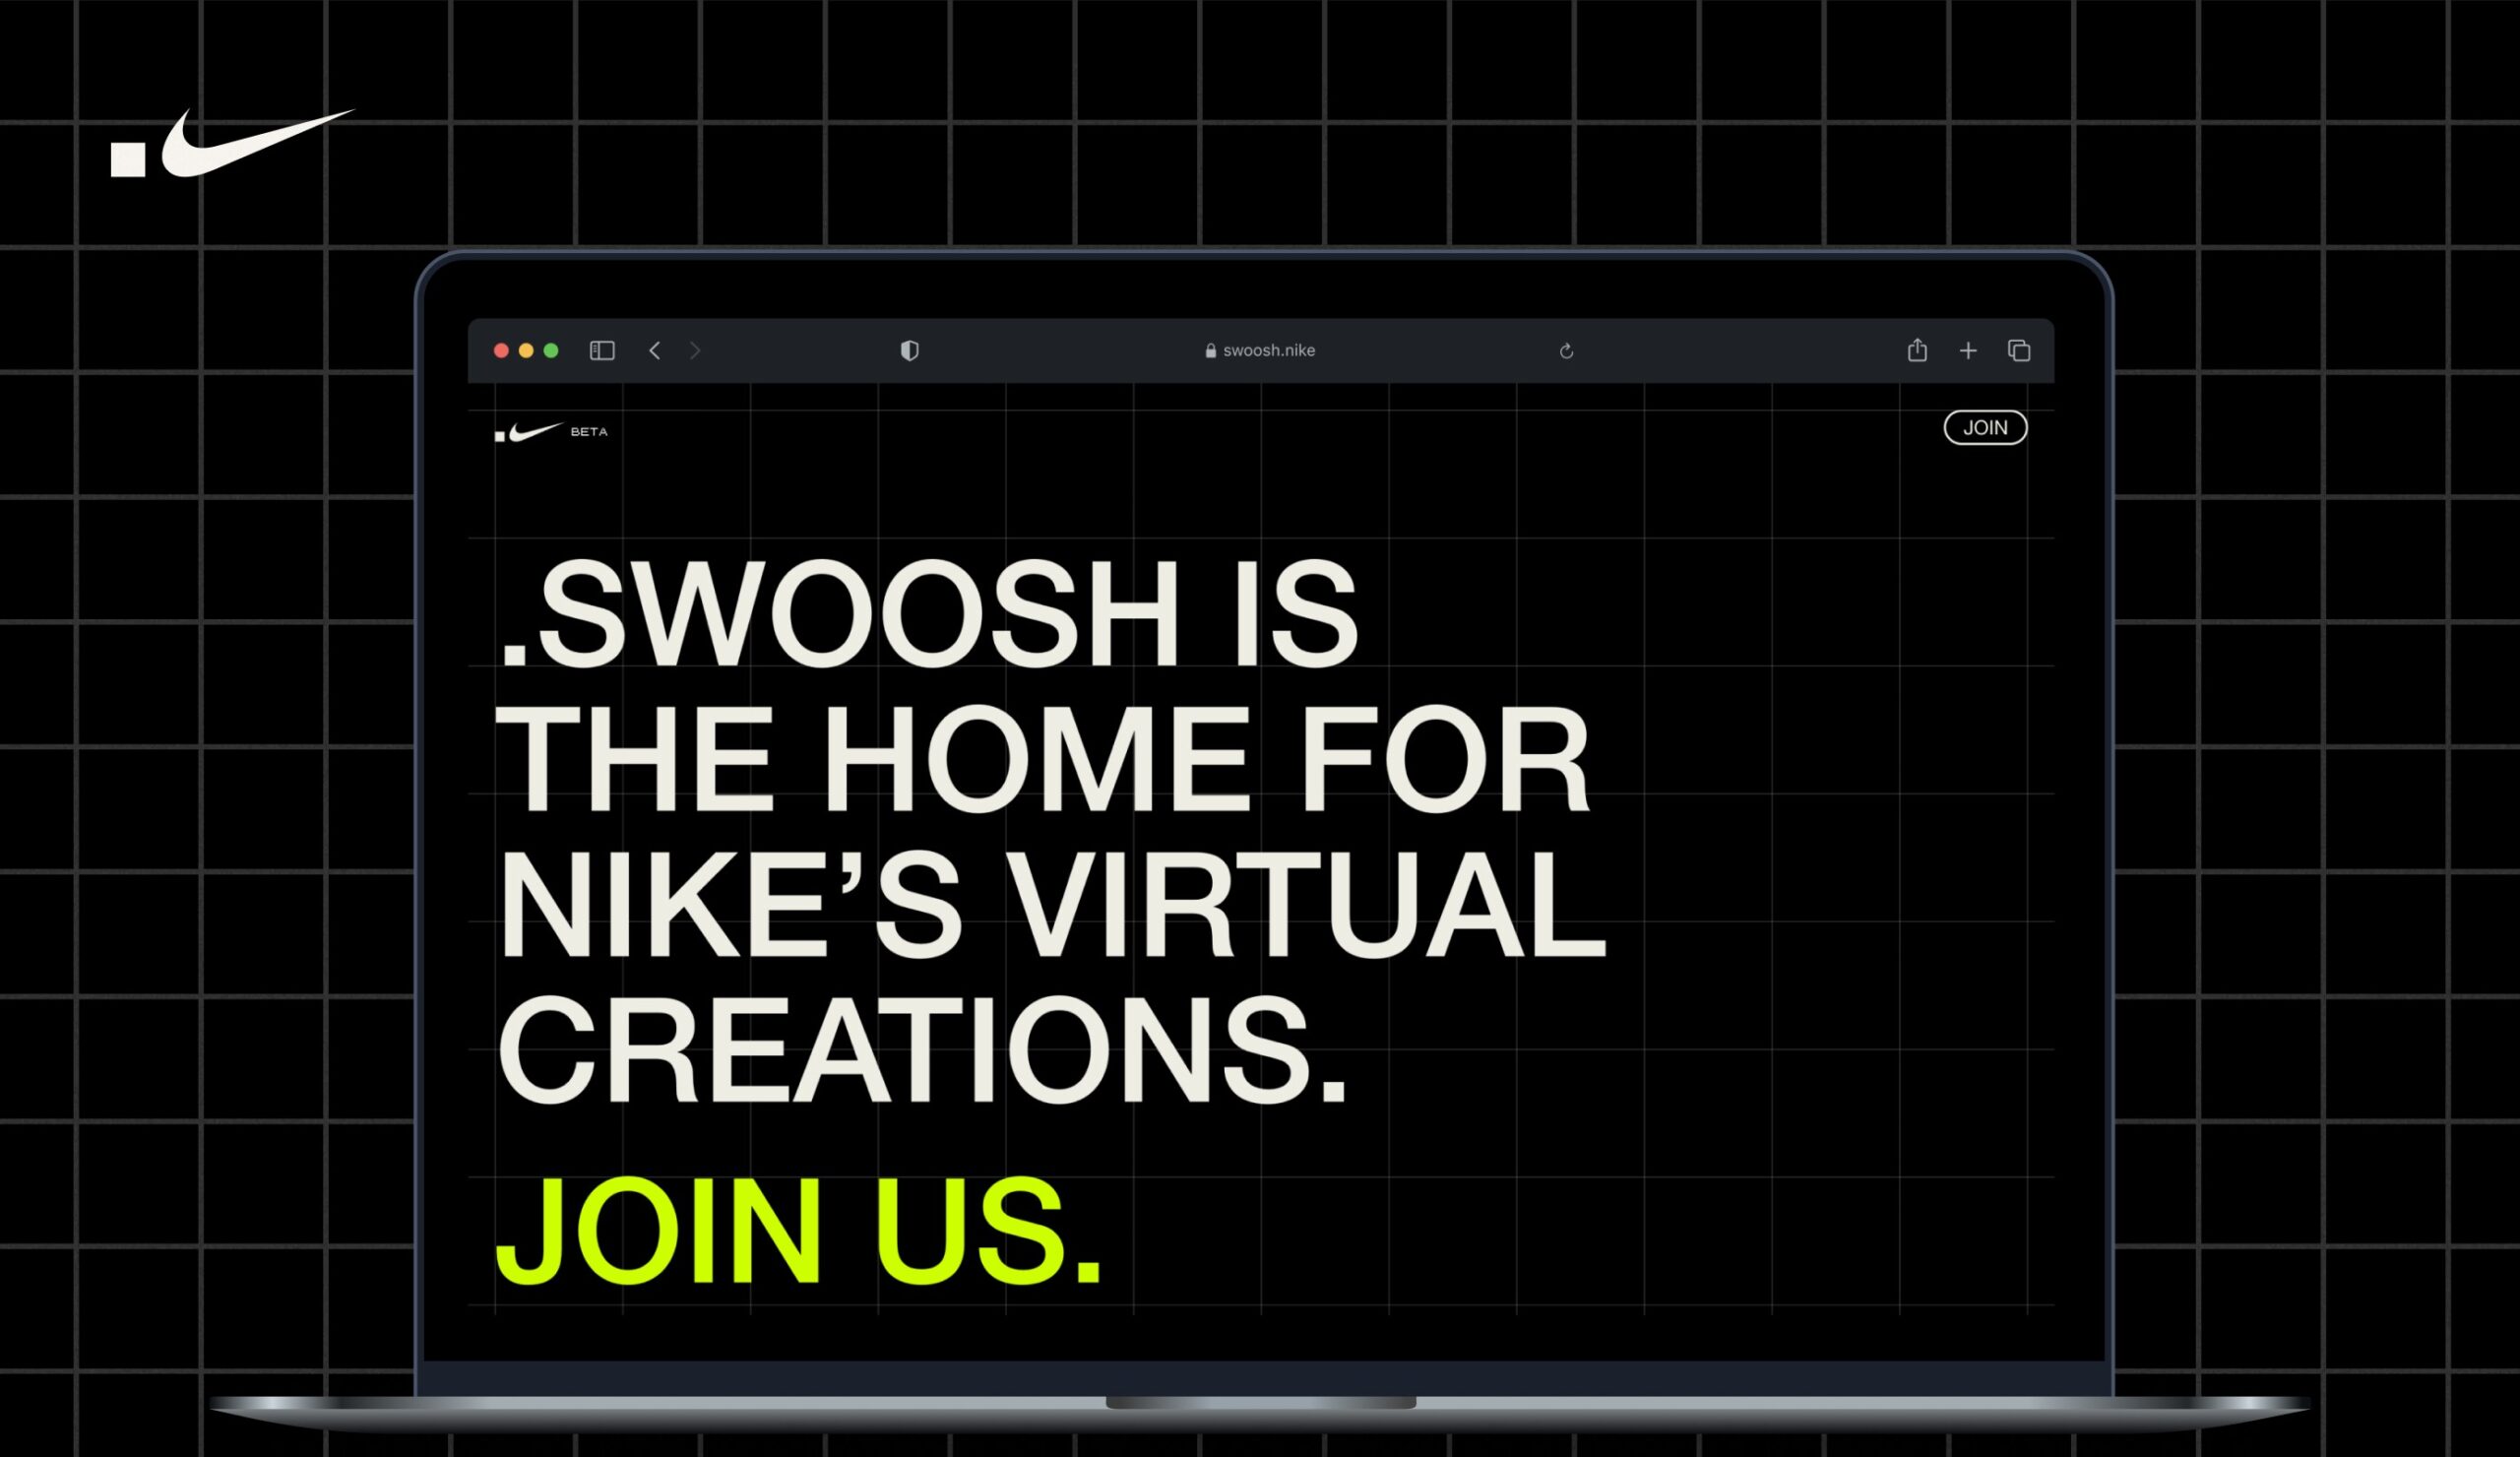 Screenshot of Nike web3 Swoosh campaign.